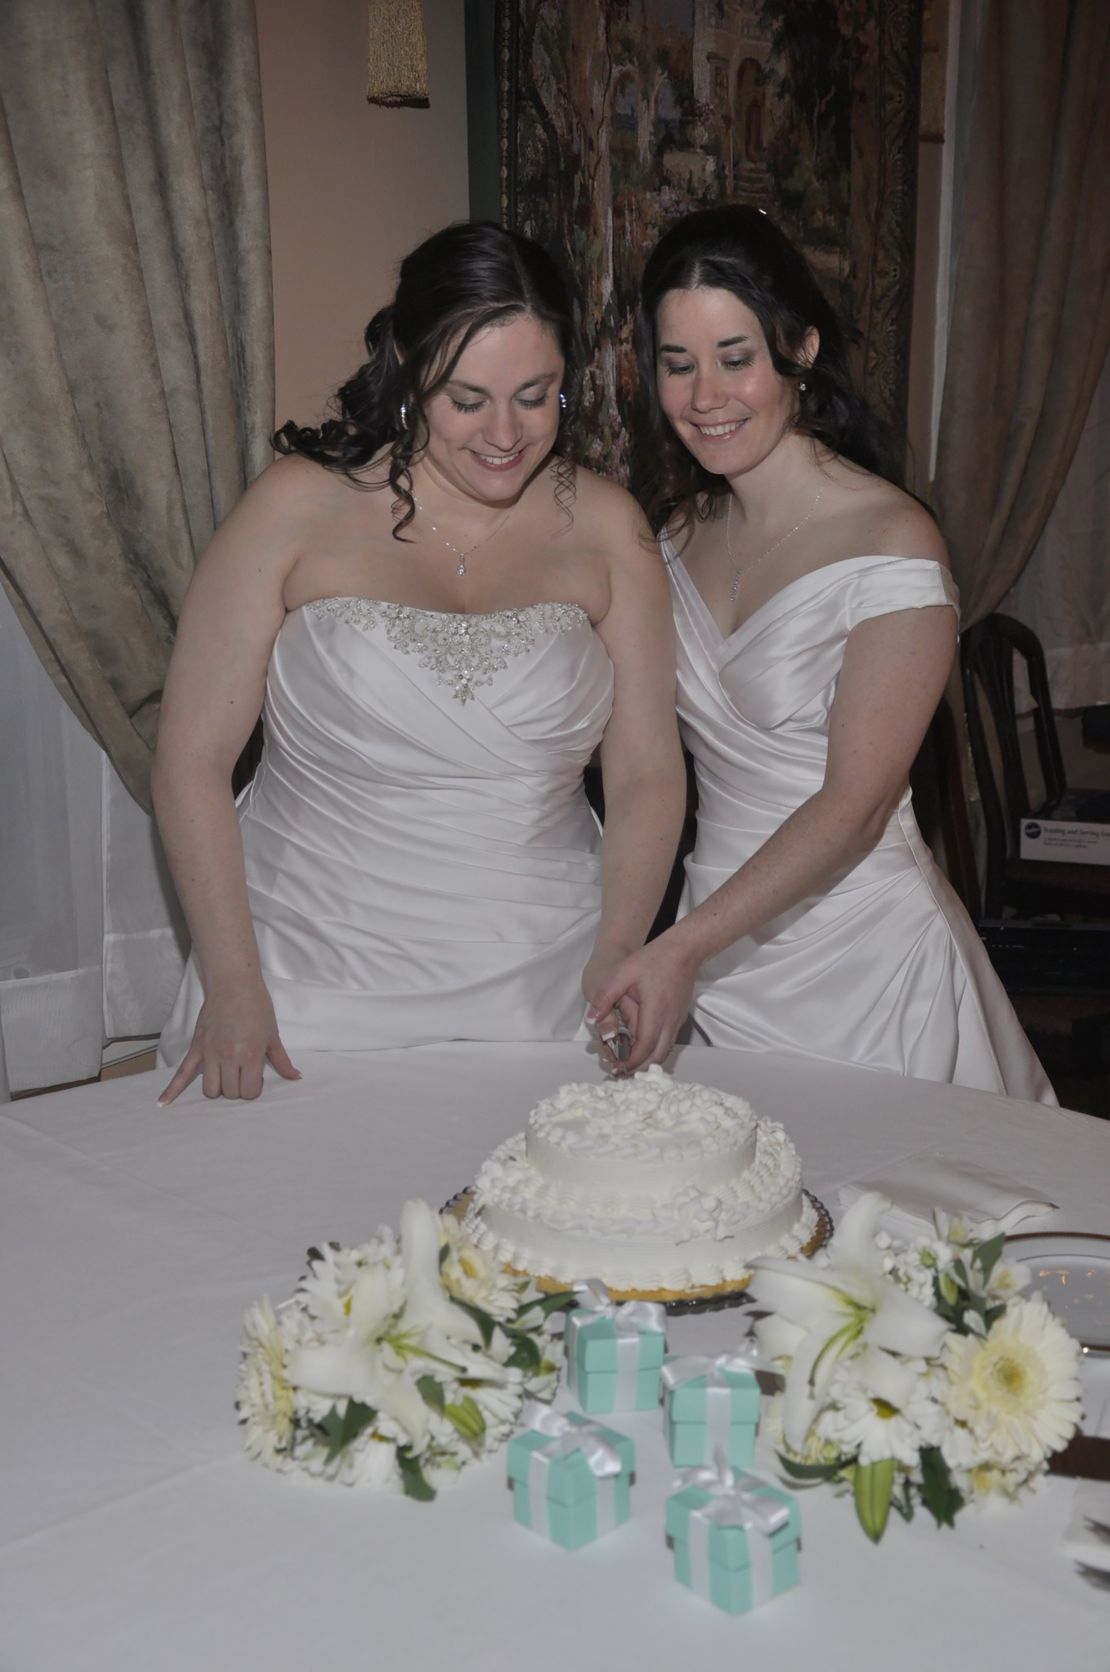 Dana, left, and Kristy Dumont got married in Vermont in 2011.